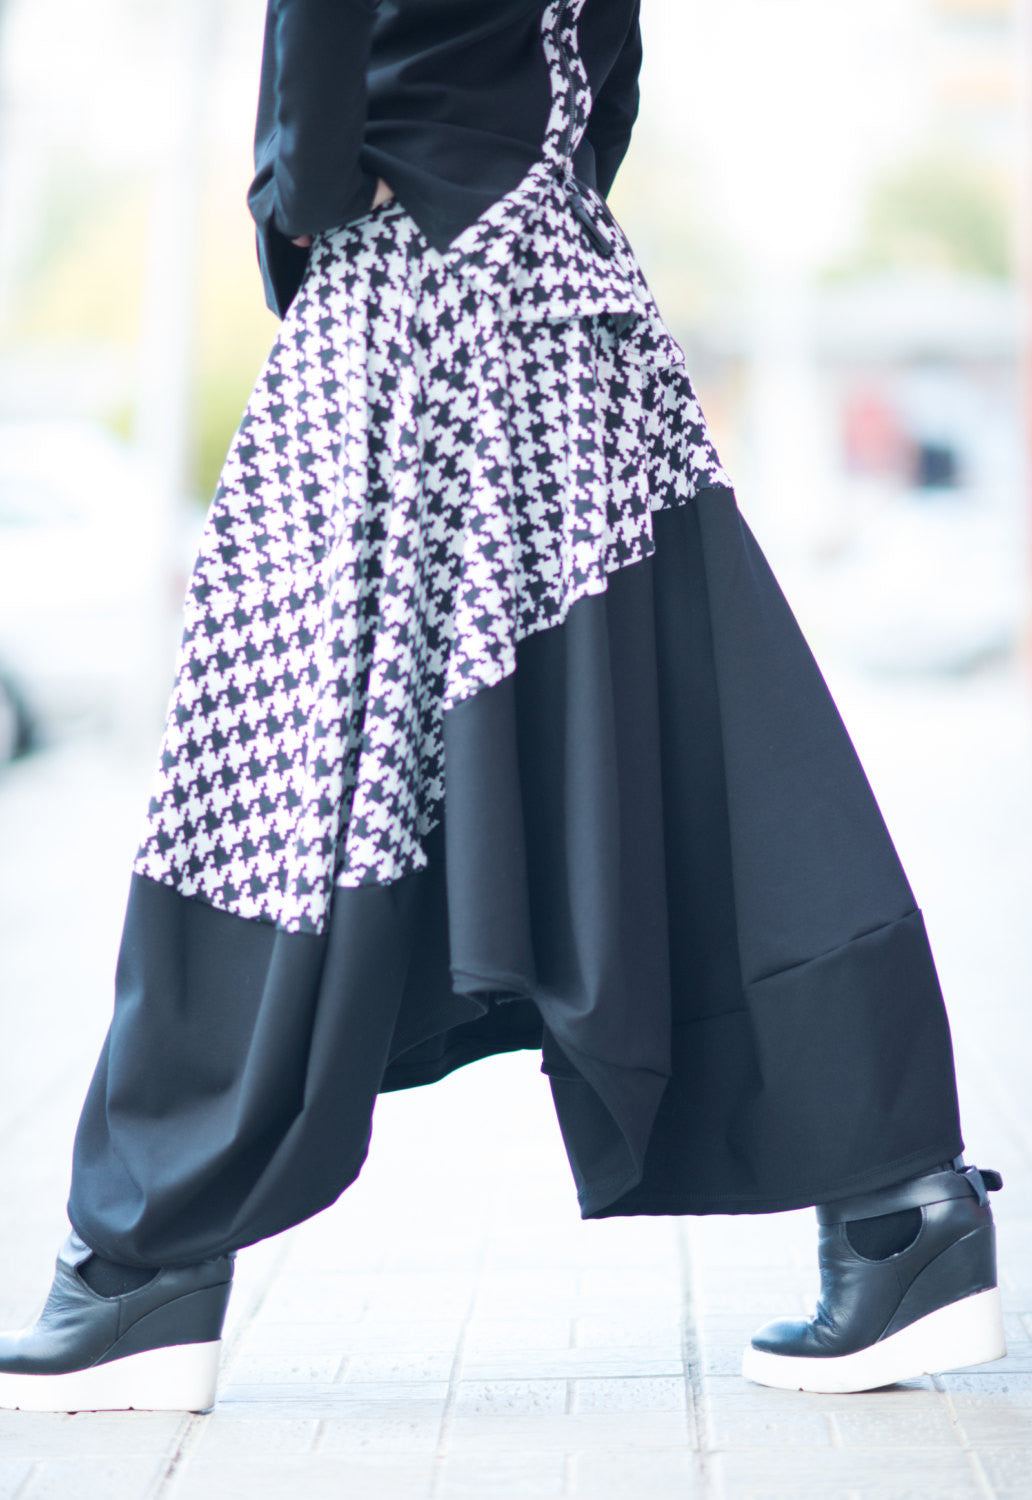 Black Shepherd's Plaid Cotton Skirt